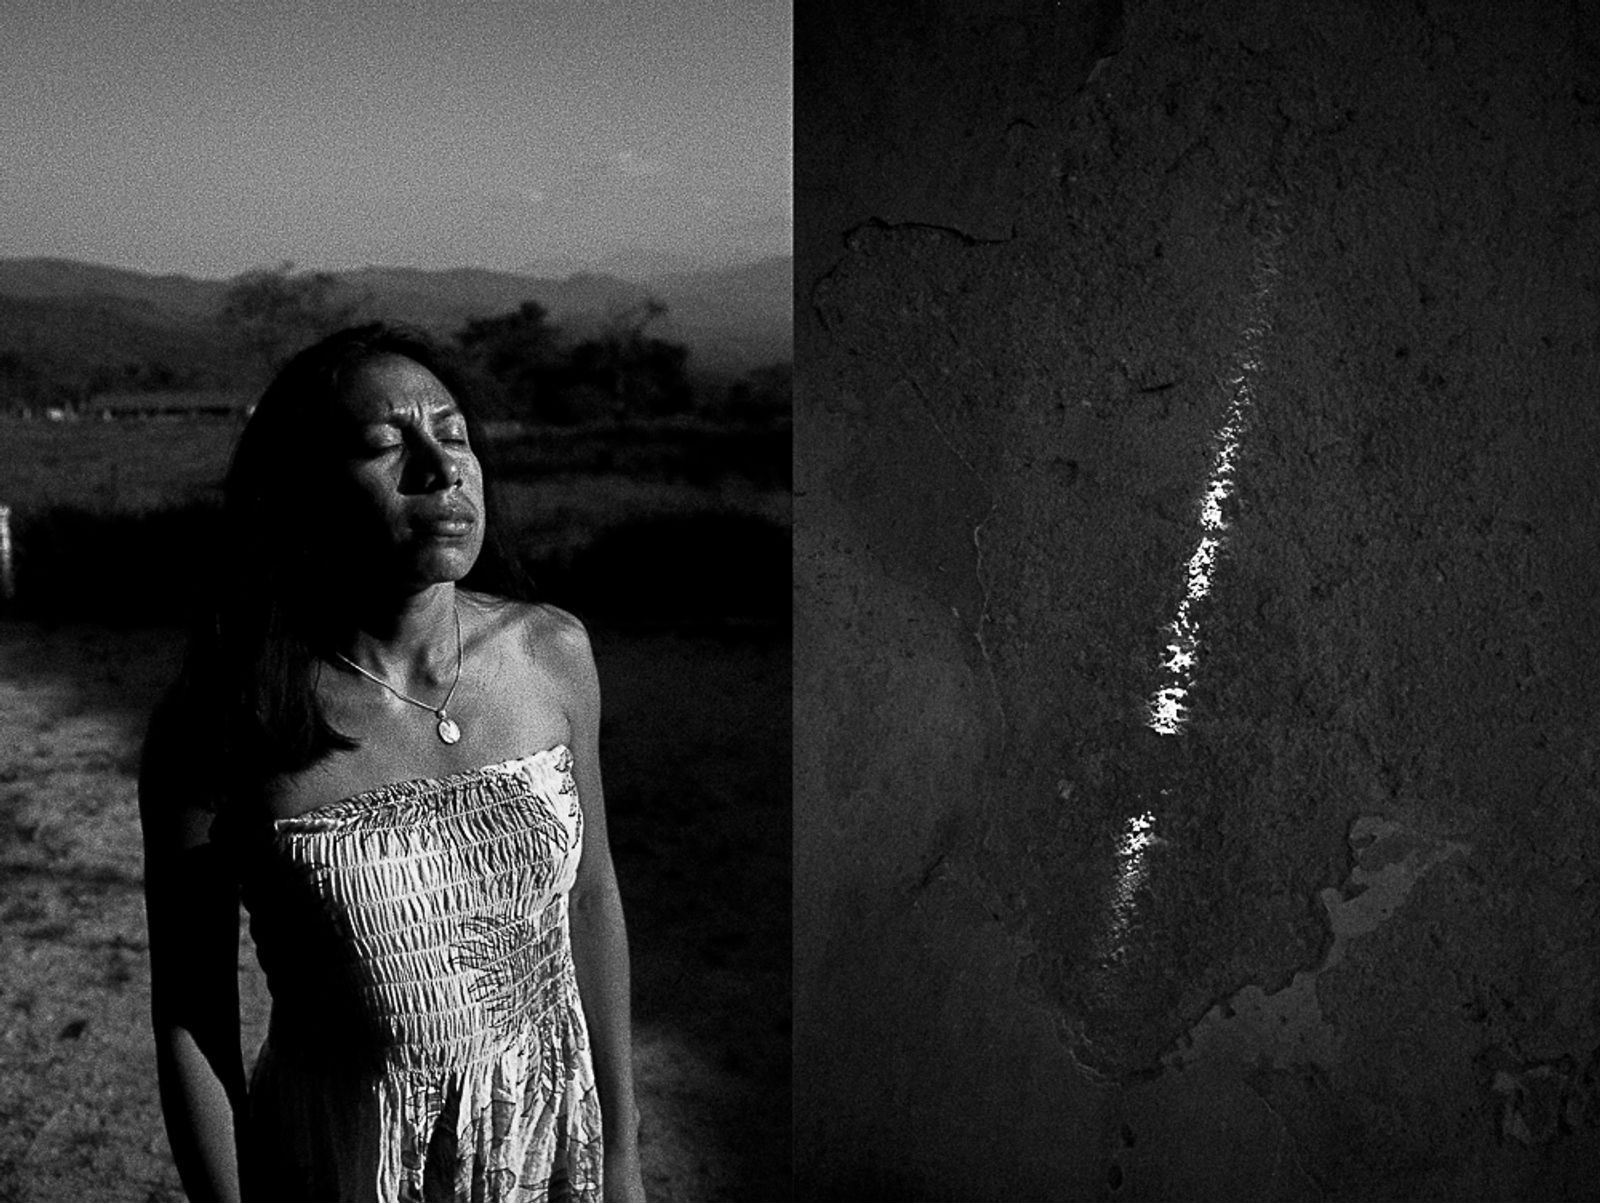 © Fabiola Ferrero, from the series, Venezuela: Blurred in Despair